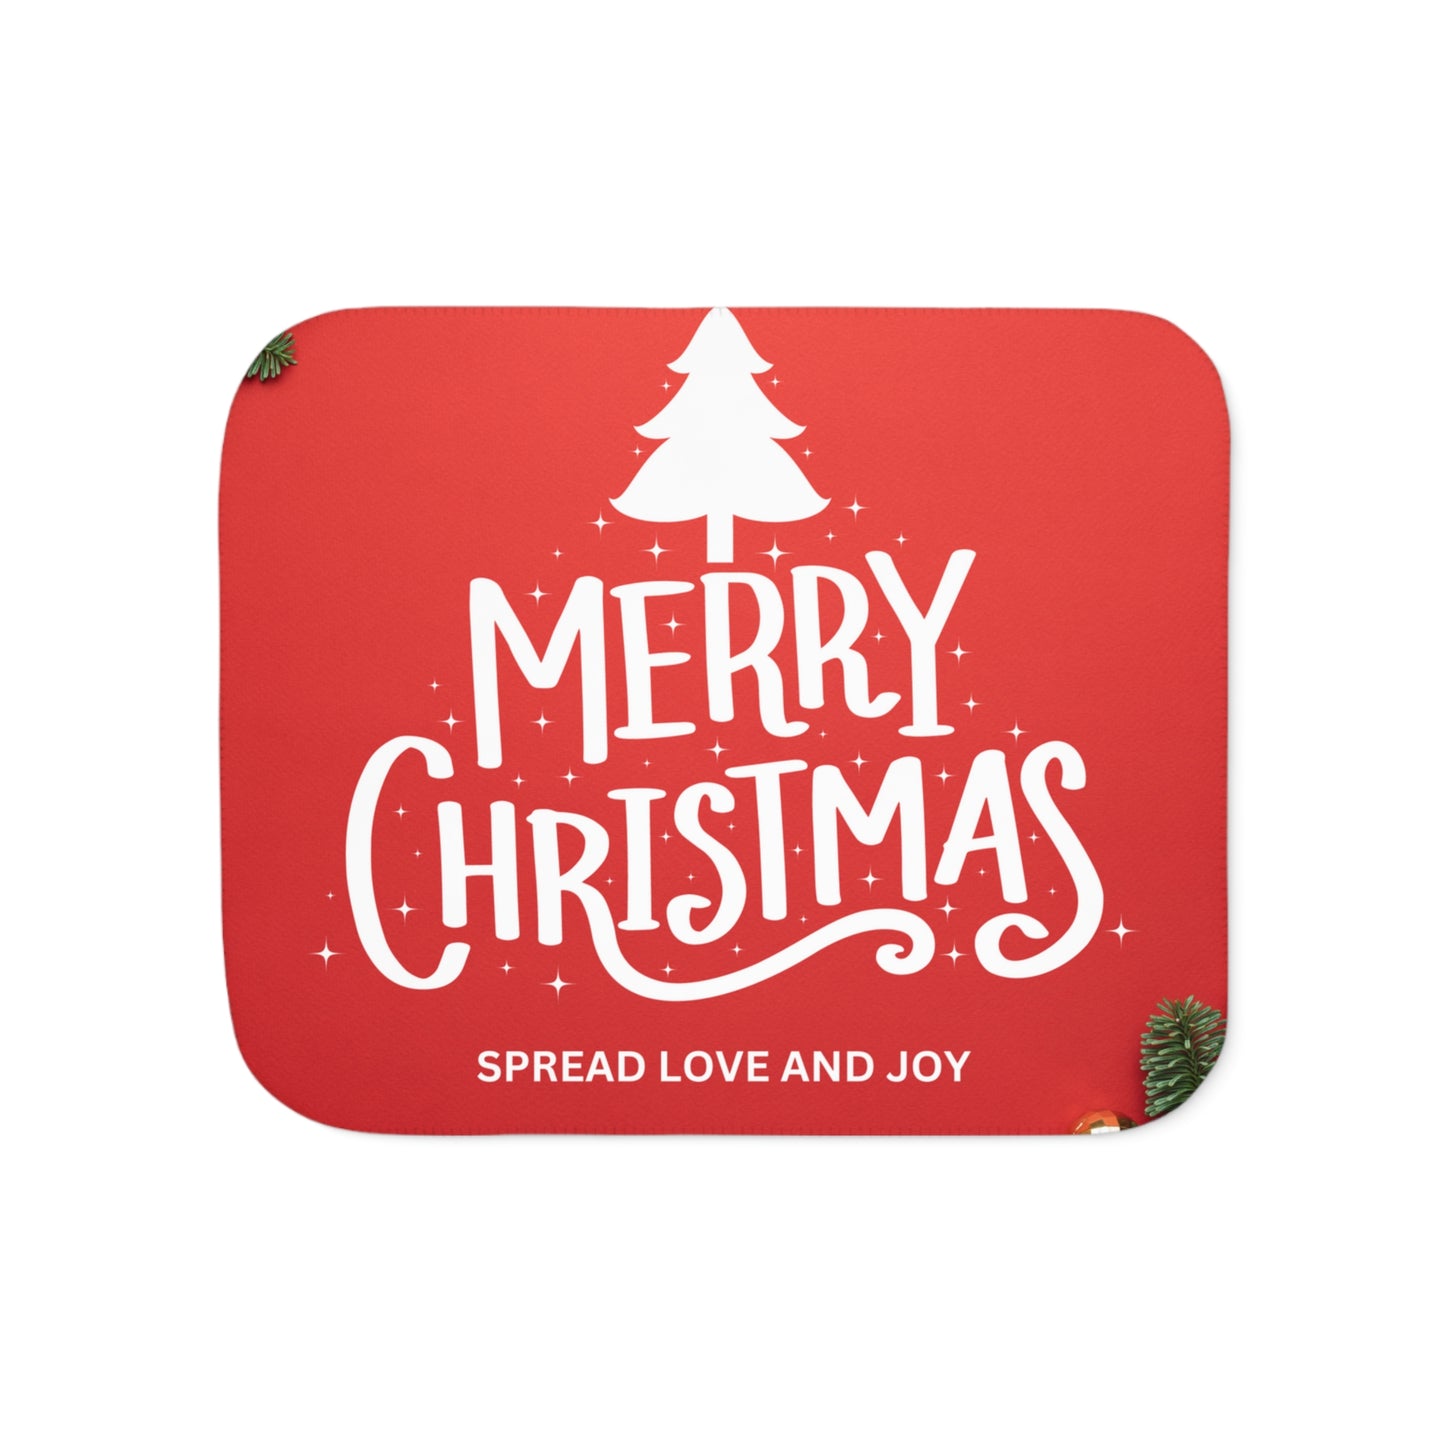 Merry Christmas, Spread Love and Joy Printed Sherpa Blanket